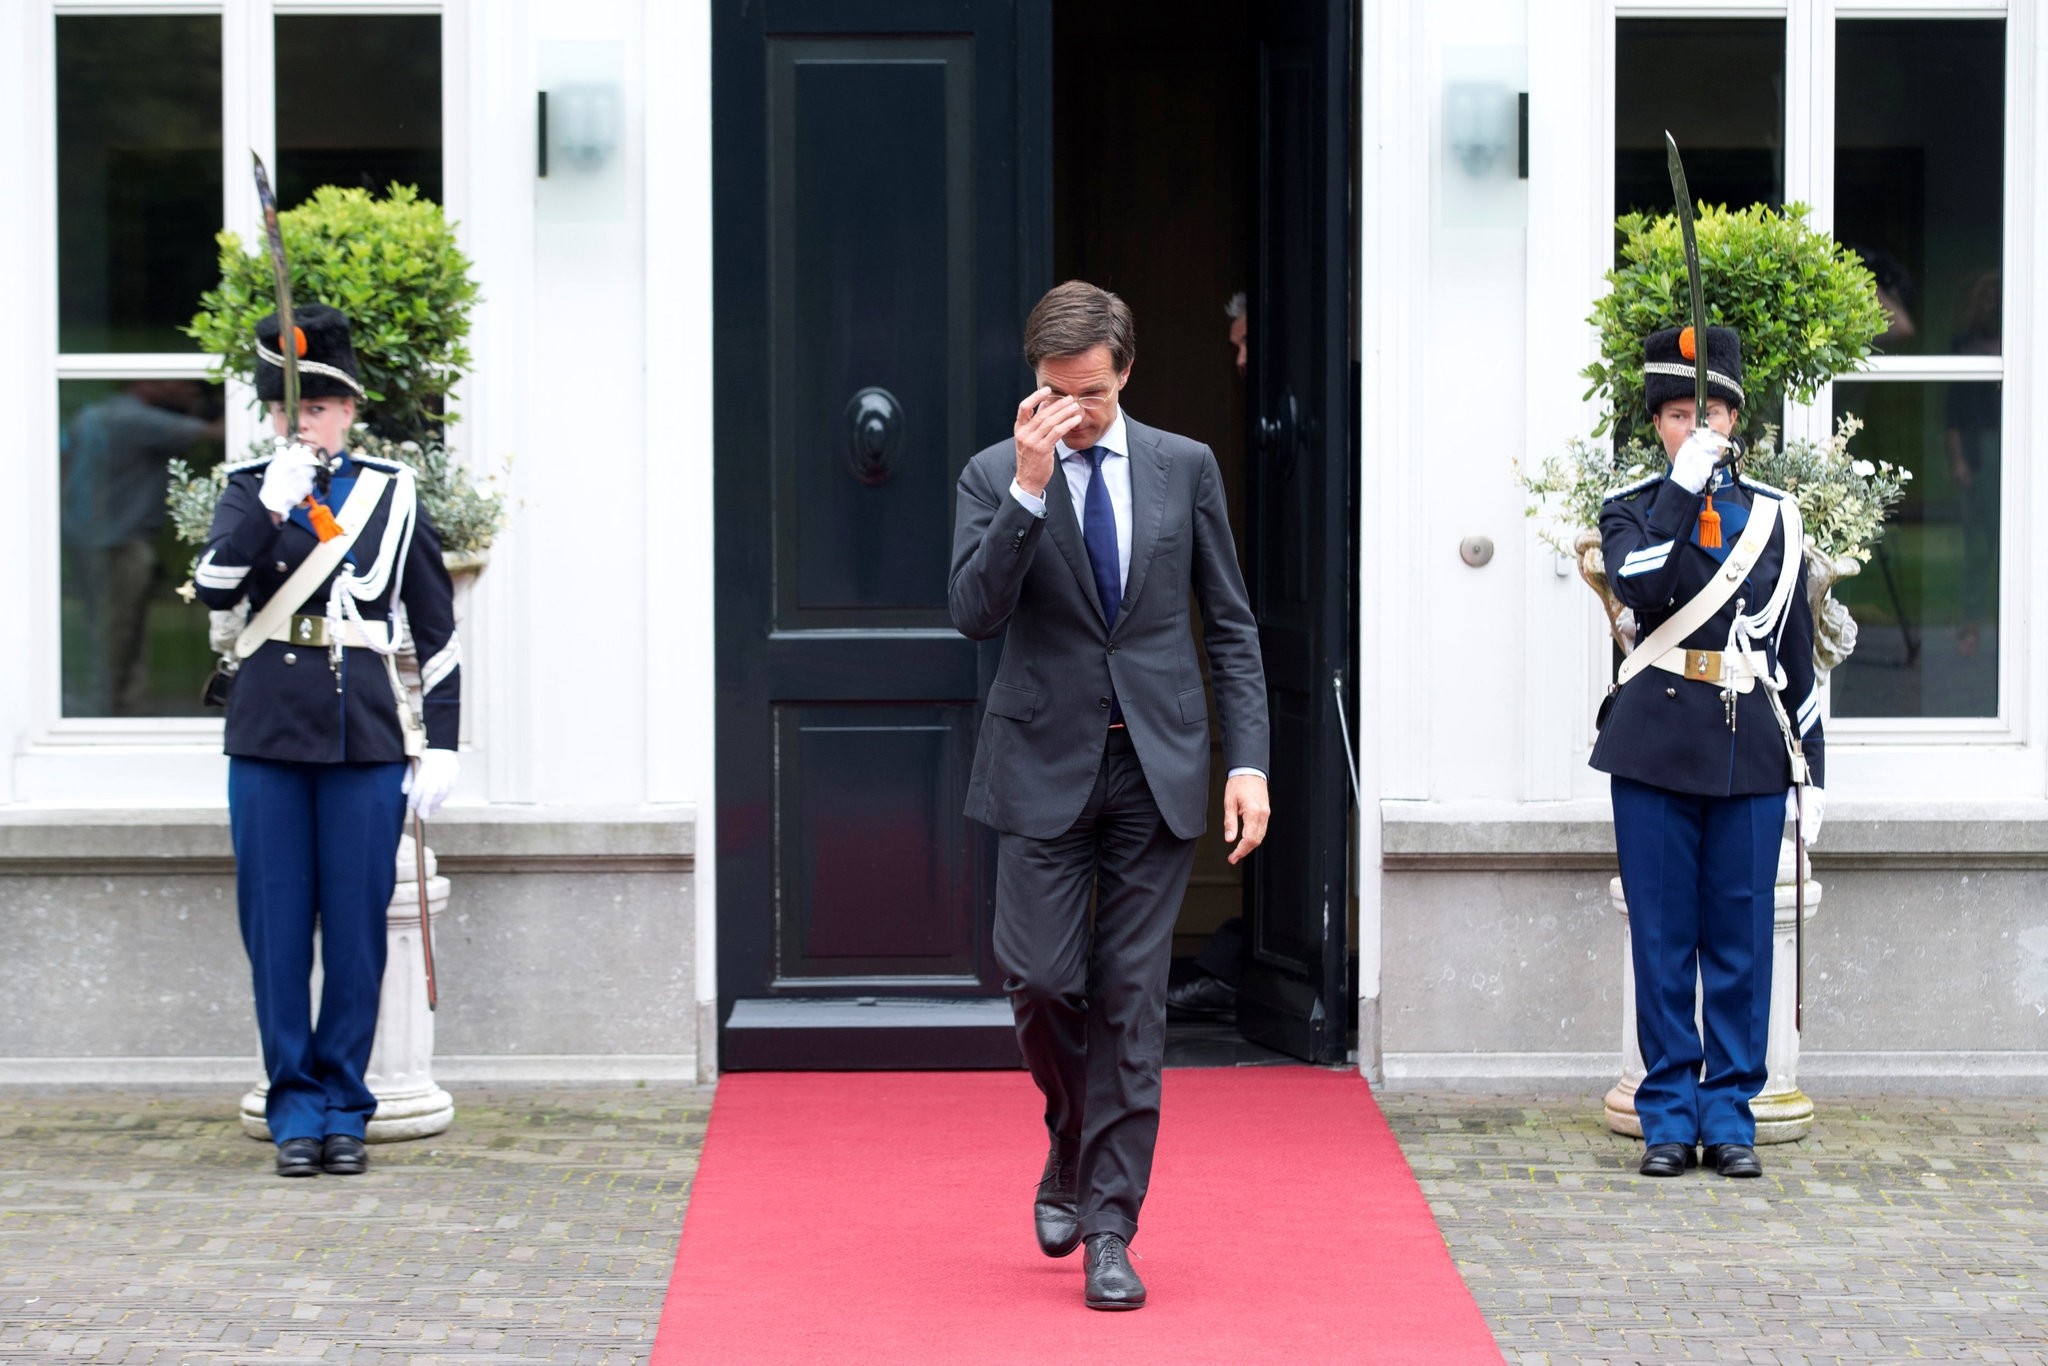 Dutch Prime Minister Mark Rutte waits for Israeli Prime Minister Benjamin Netanyahu in the Hague, the Netherlands, September 6, 2016. (REUTERS Photo)